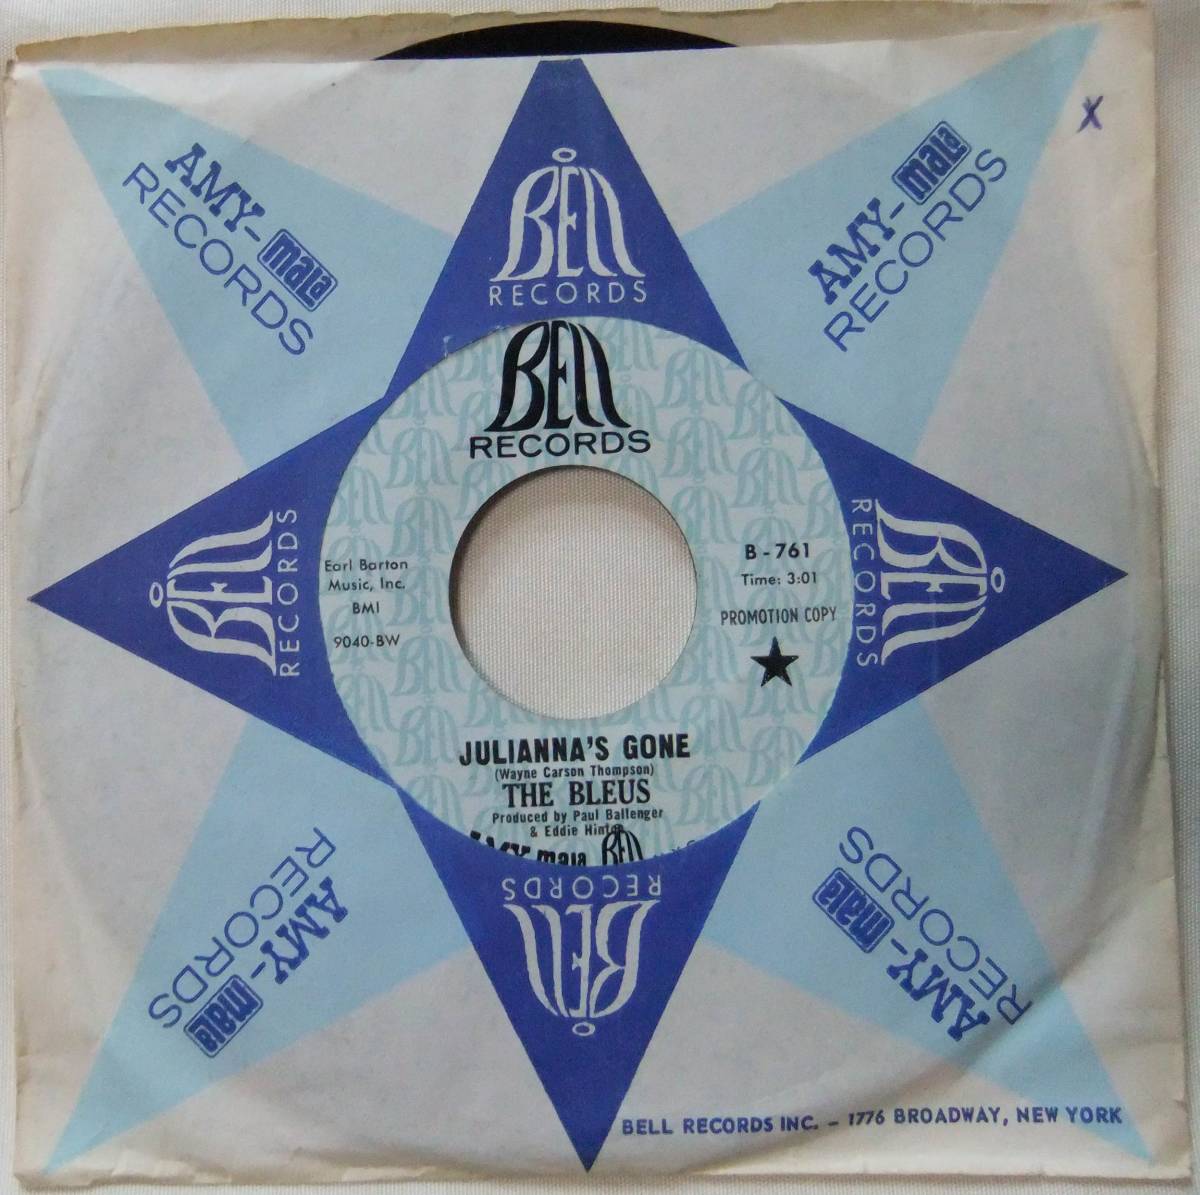 一部予約 最大79％オフ The Bleus feat.Duane Allman A: Julianna's Gone - B: Mystery Smoke '7inch Single '69US Bell Records Promo-copy acekillerstudio.com acekillerstudio.com